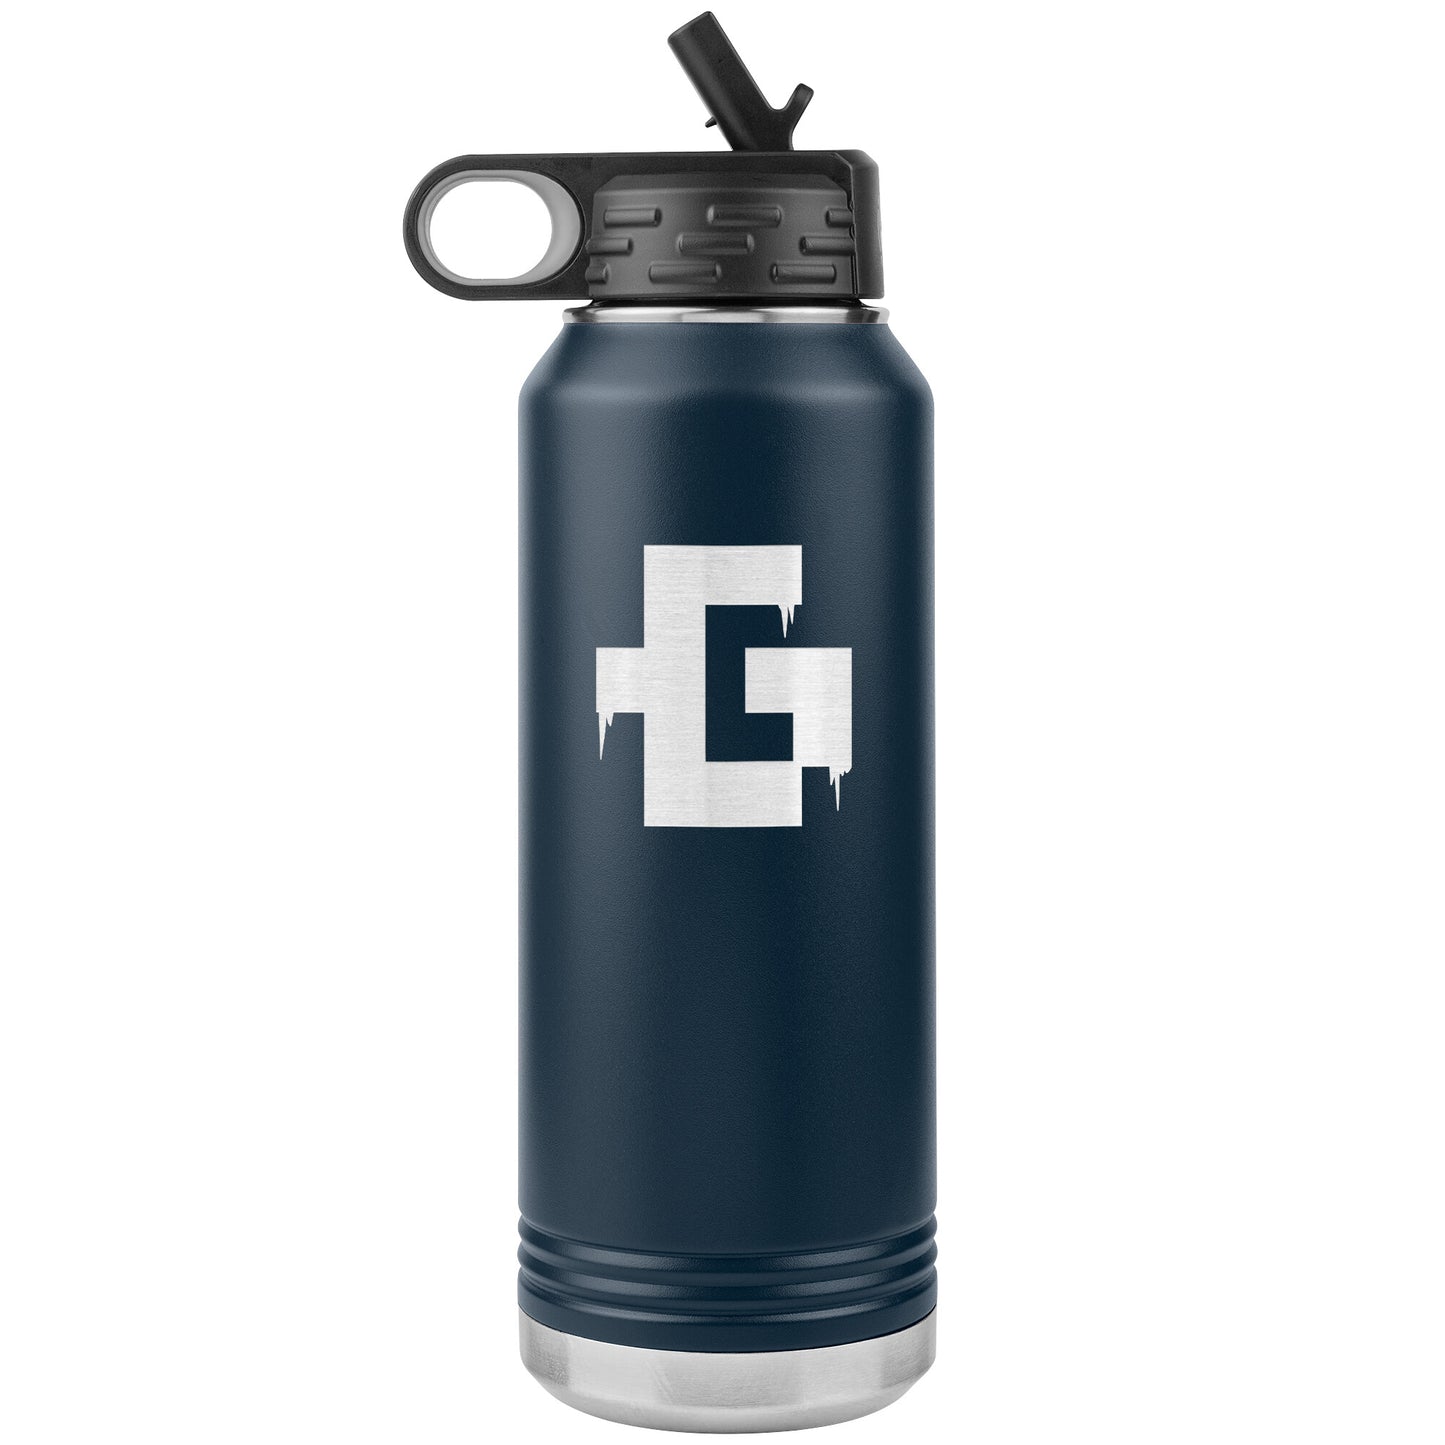 Gamer hydration 32 oz. water bottle